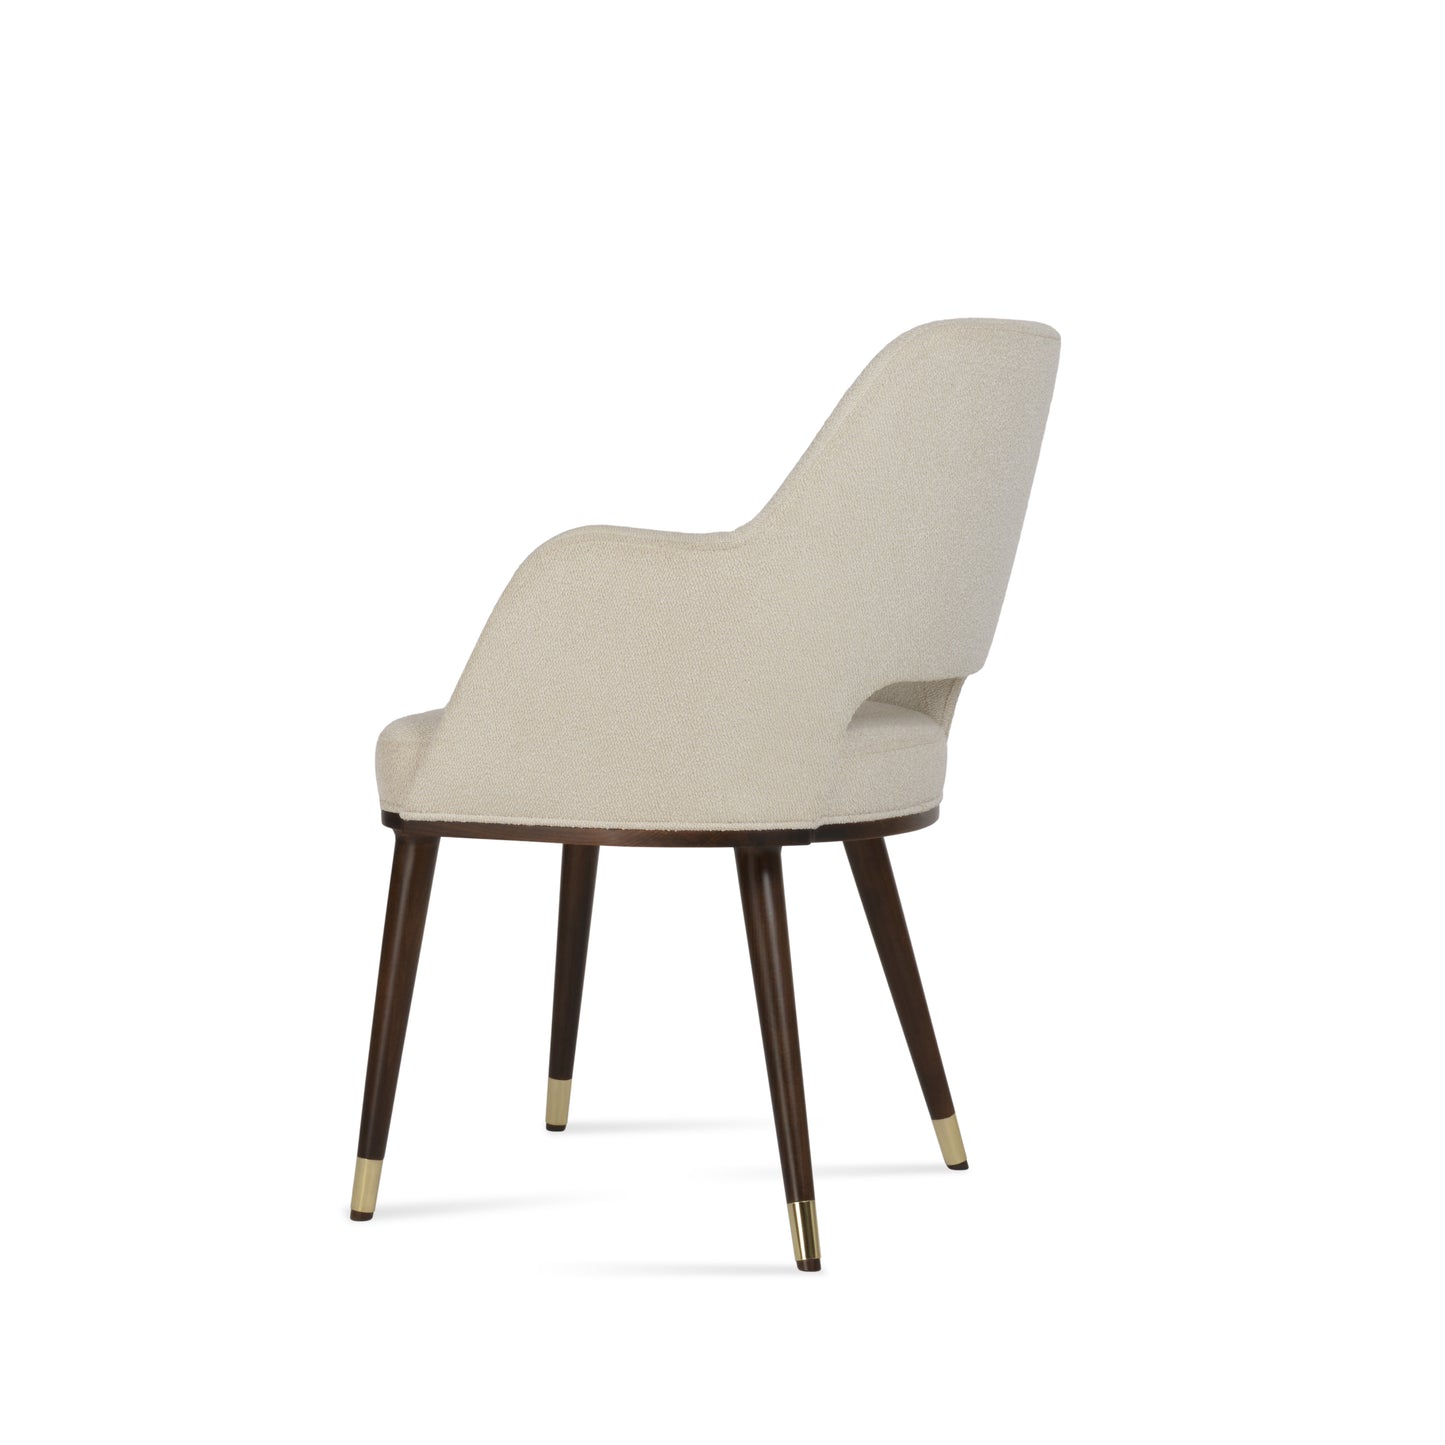 Stylish Seating Solution: Marash Arm Wood Chair